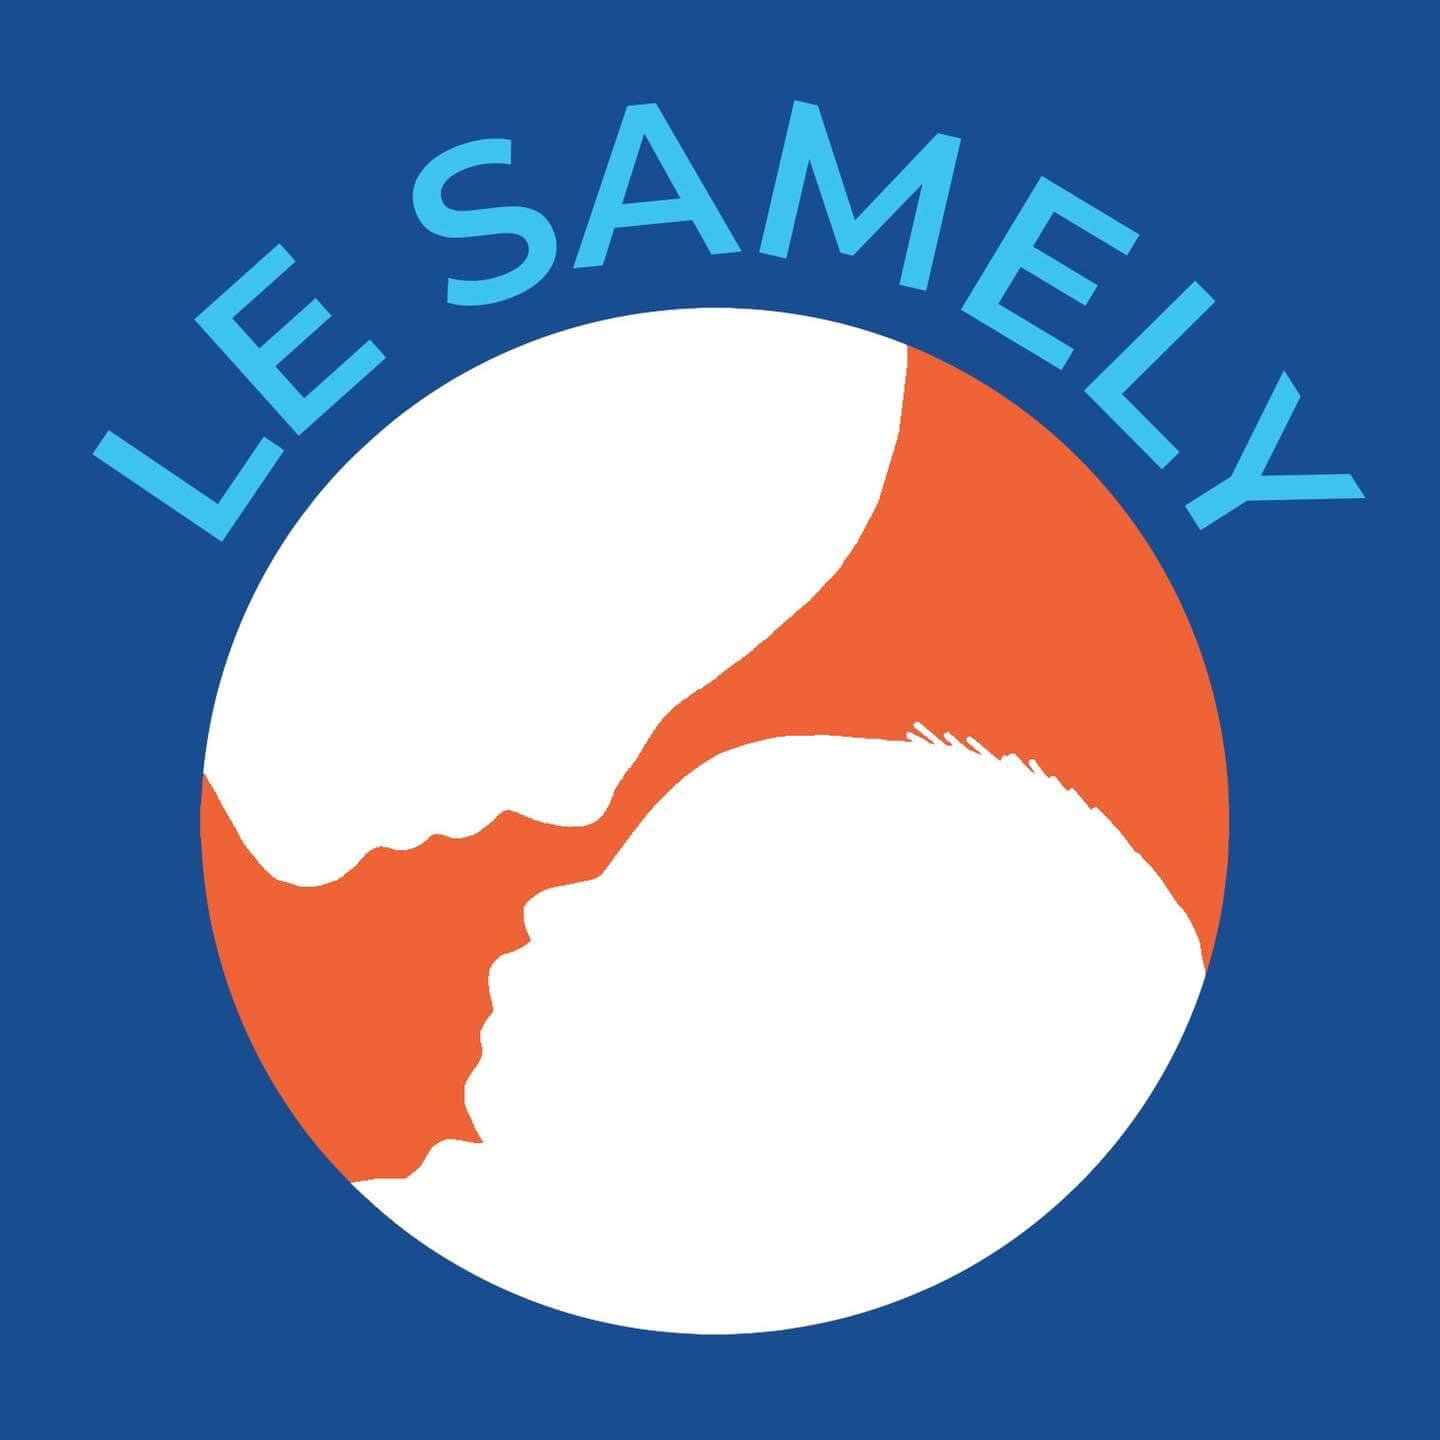 Le SAMELY Fête Ses 10 Ans !